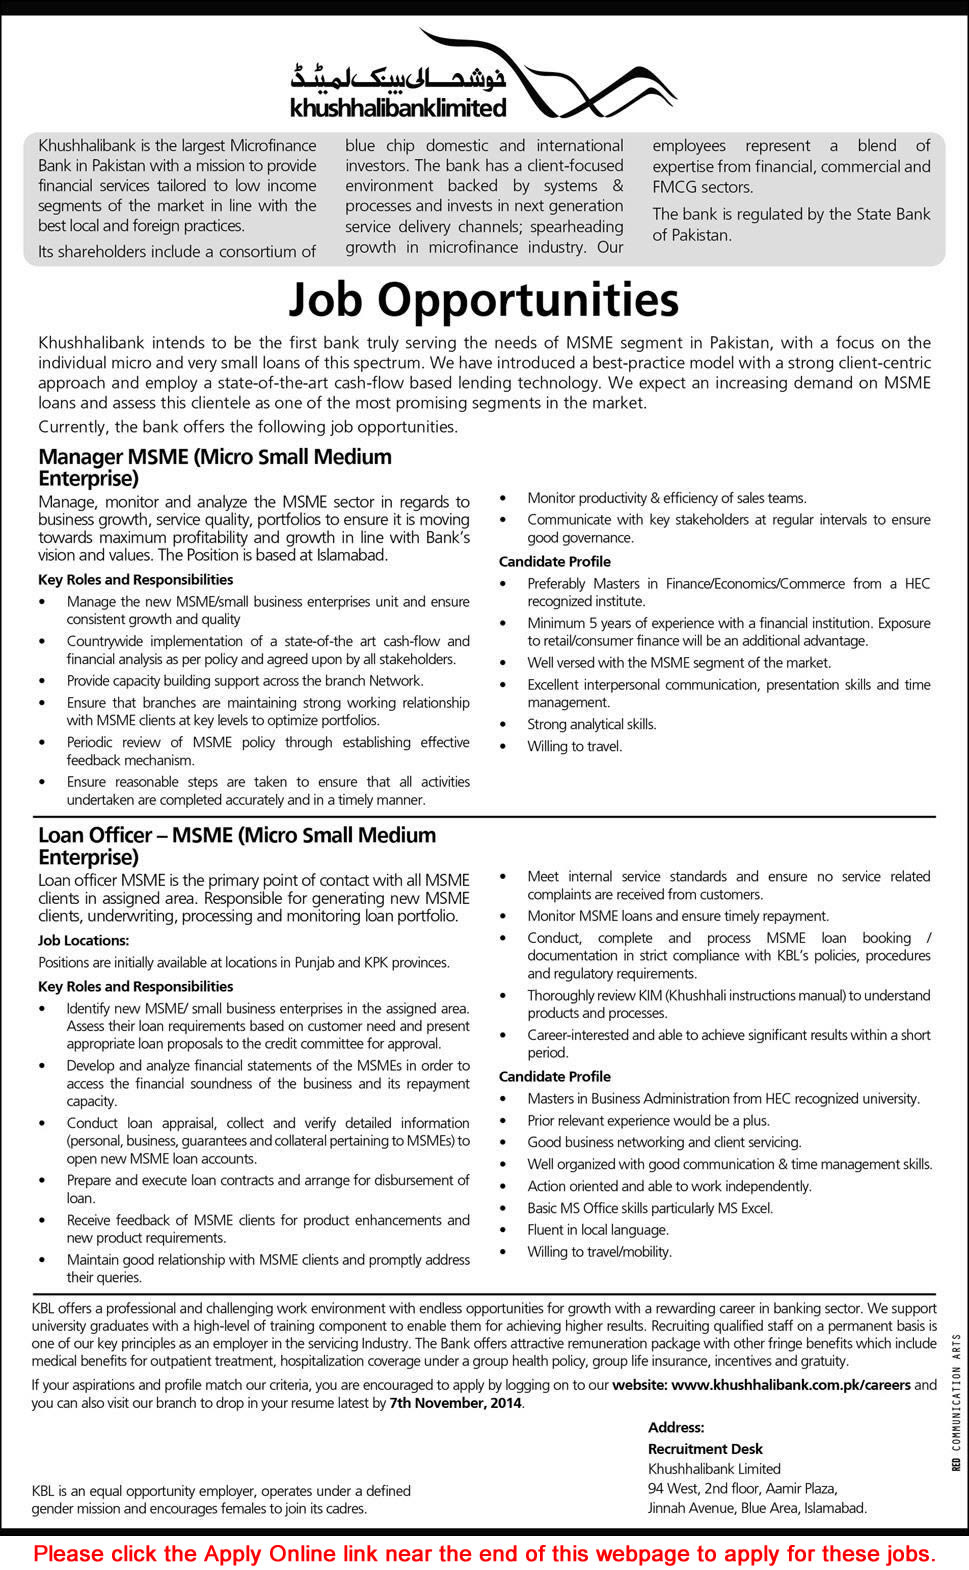 Khushhali Bank Limited Jobs 2014 October / November Pakistan Latest Advertisement